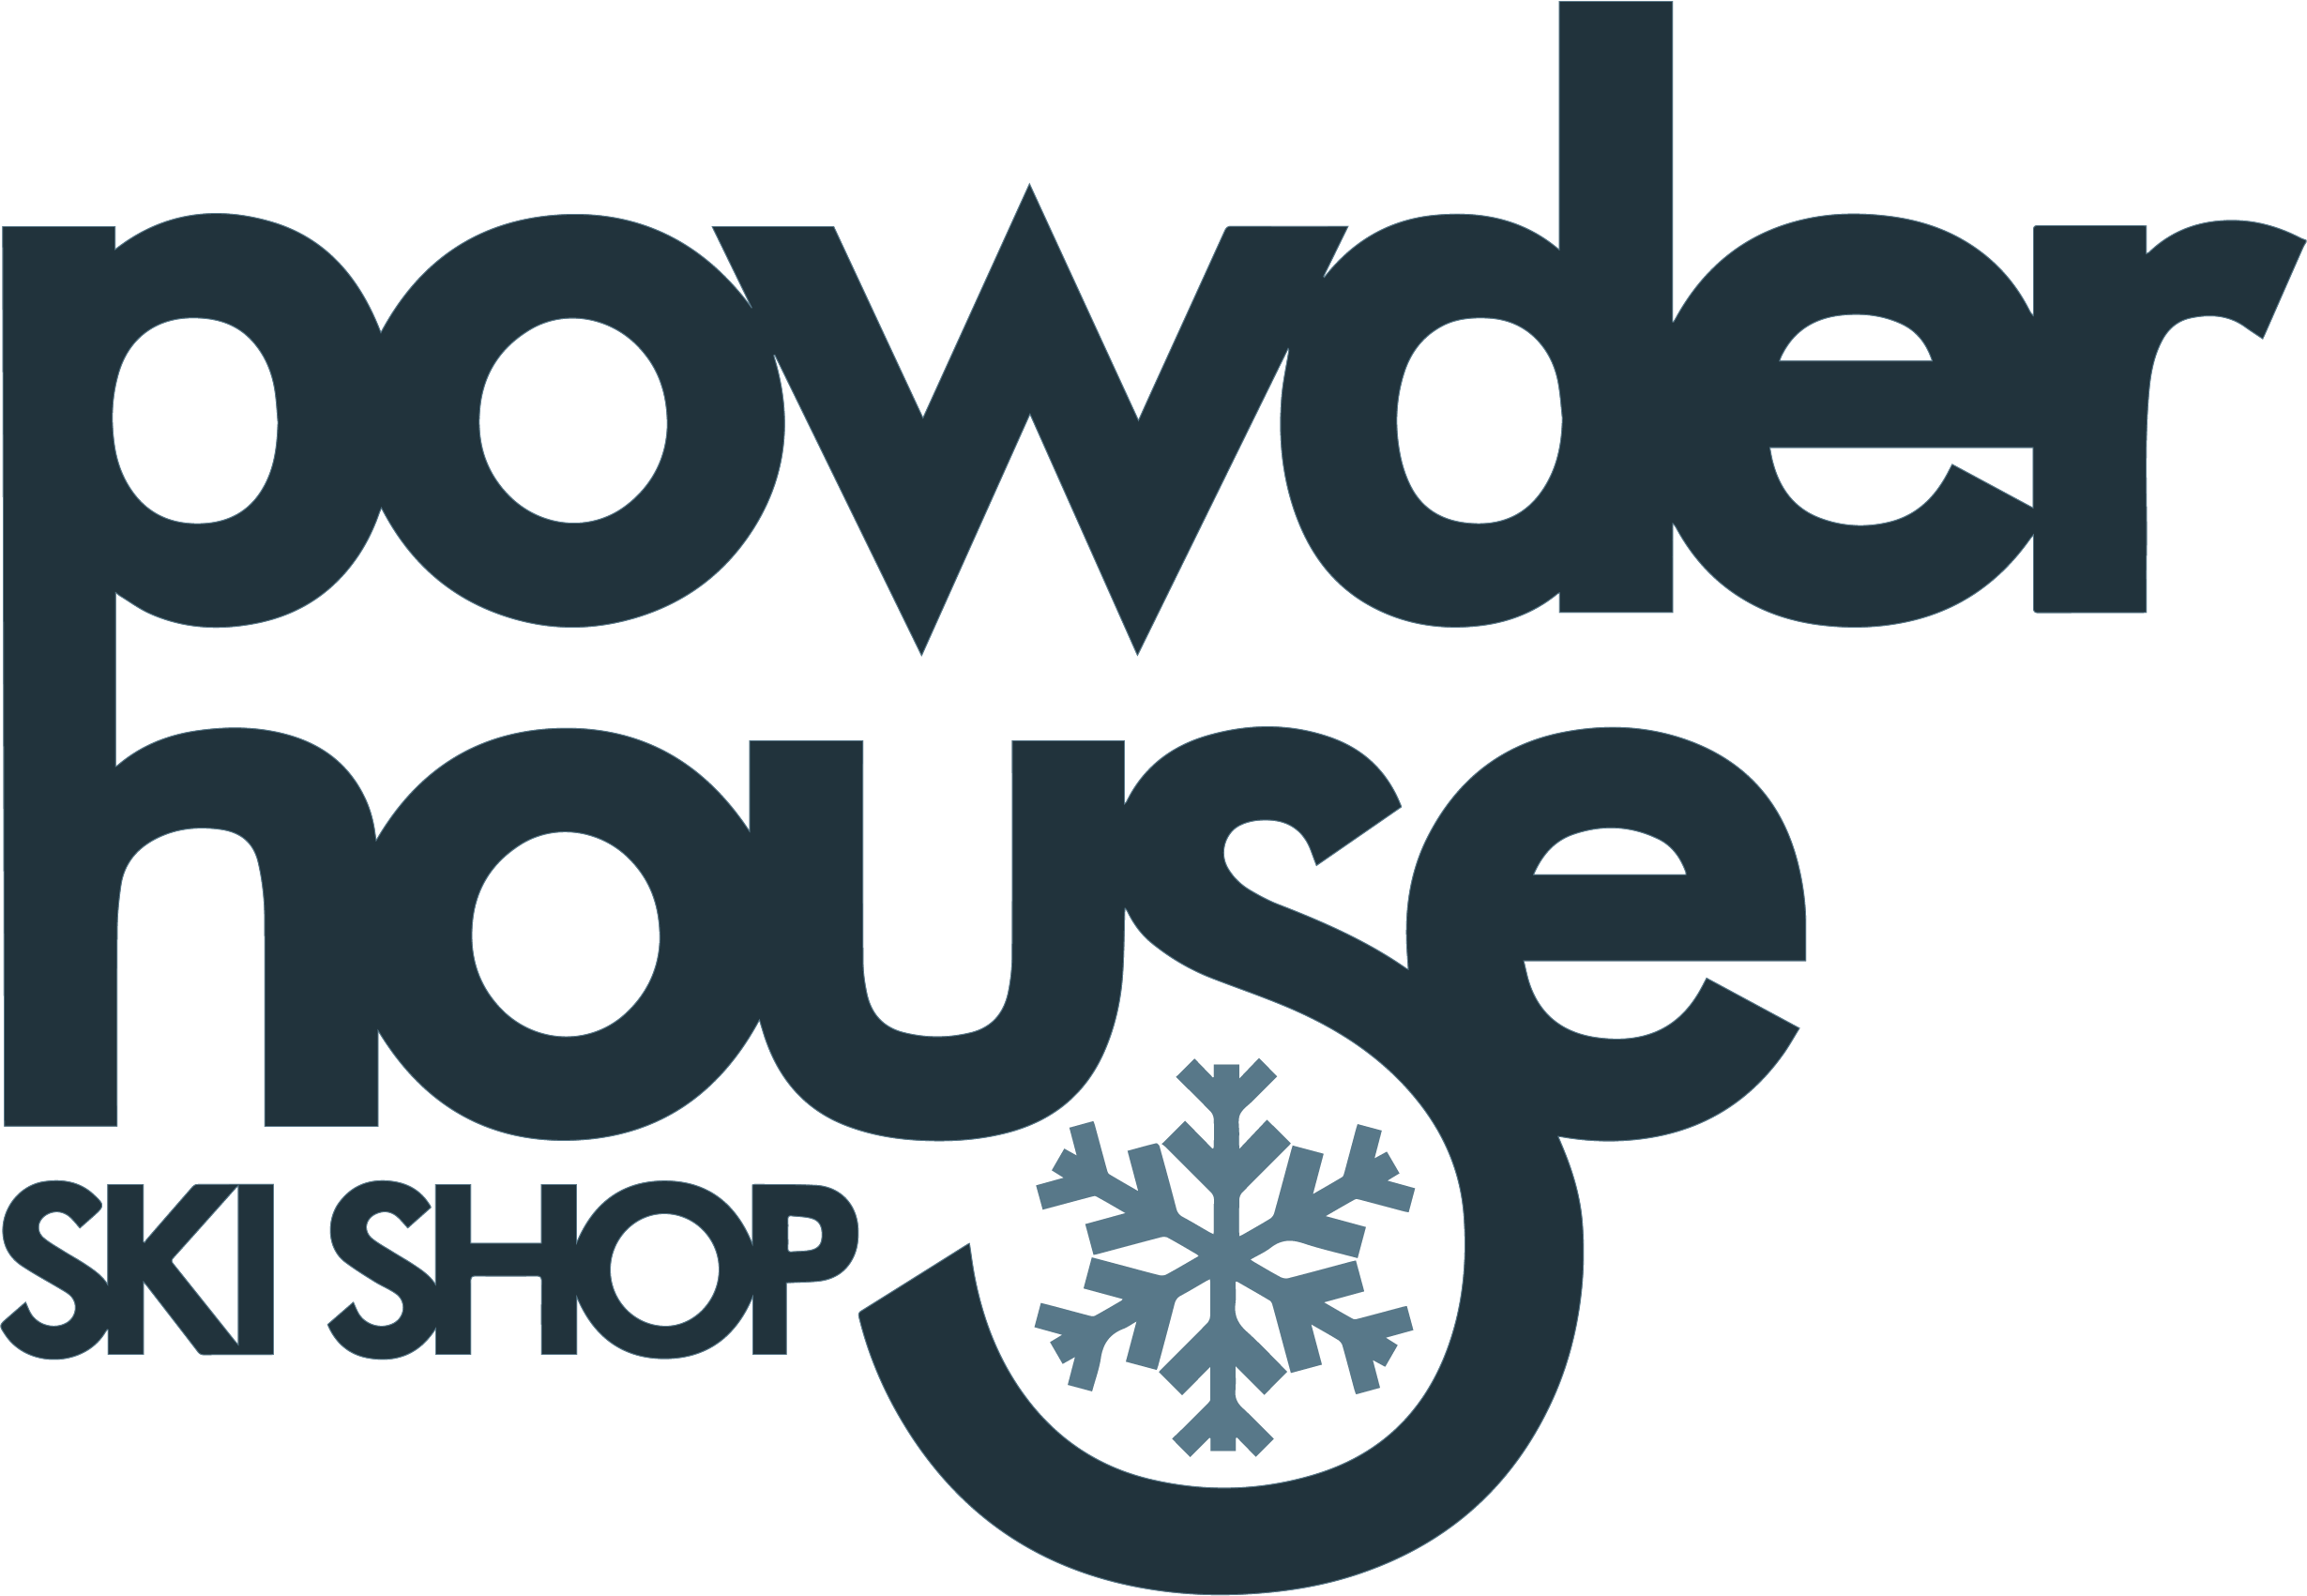 Powder House Ski Shop